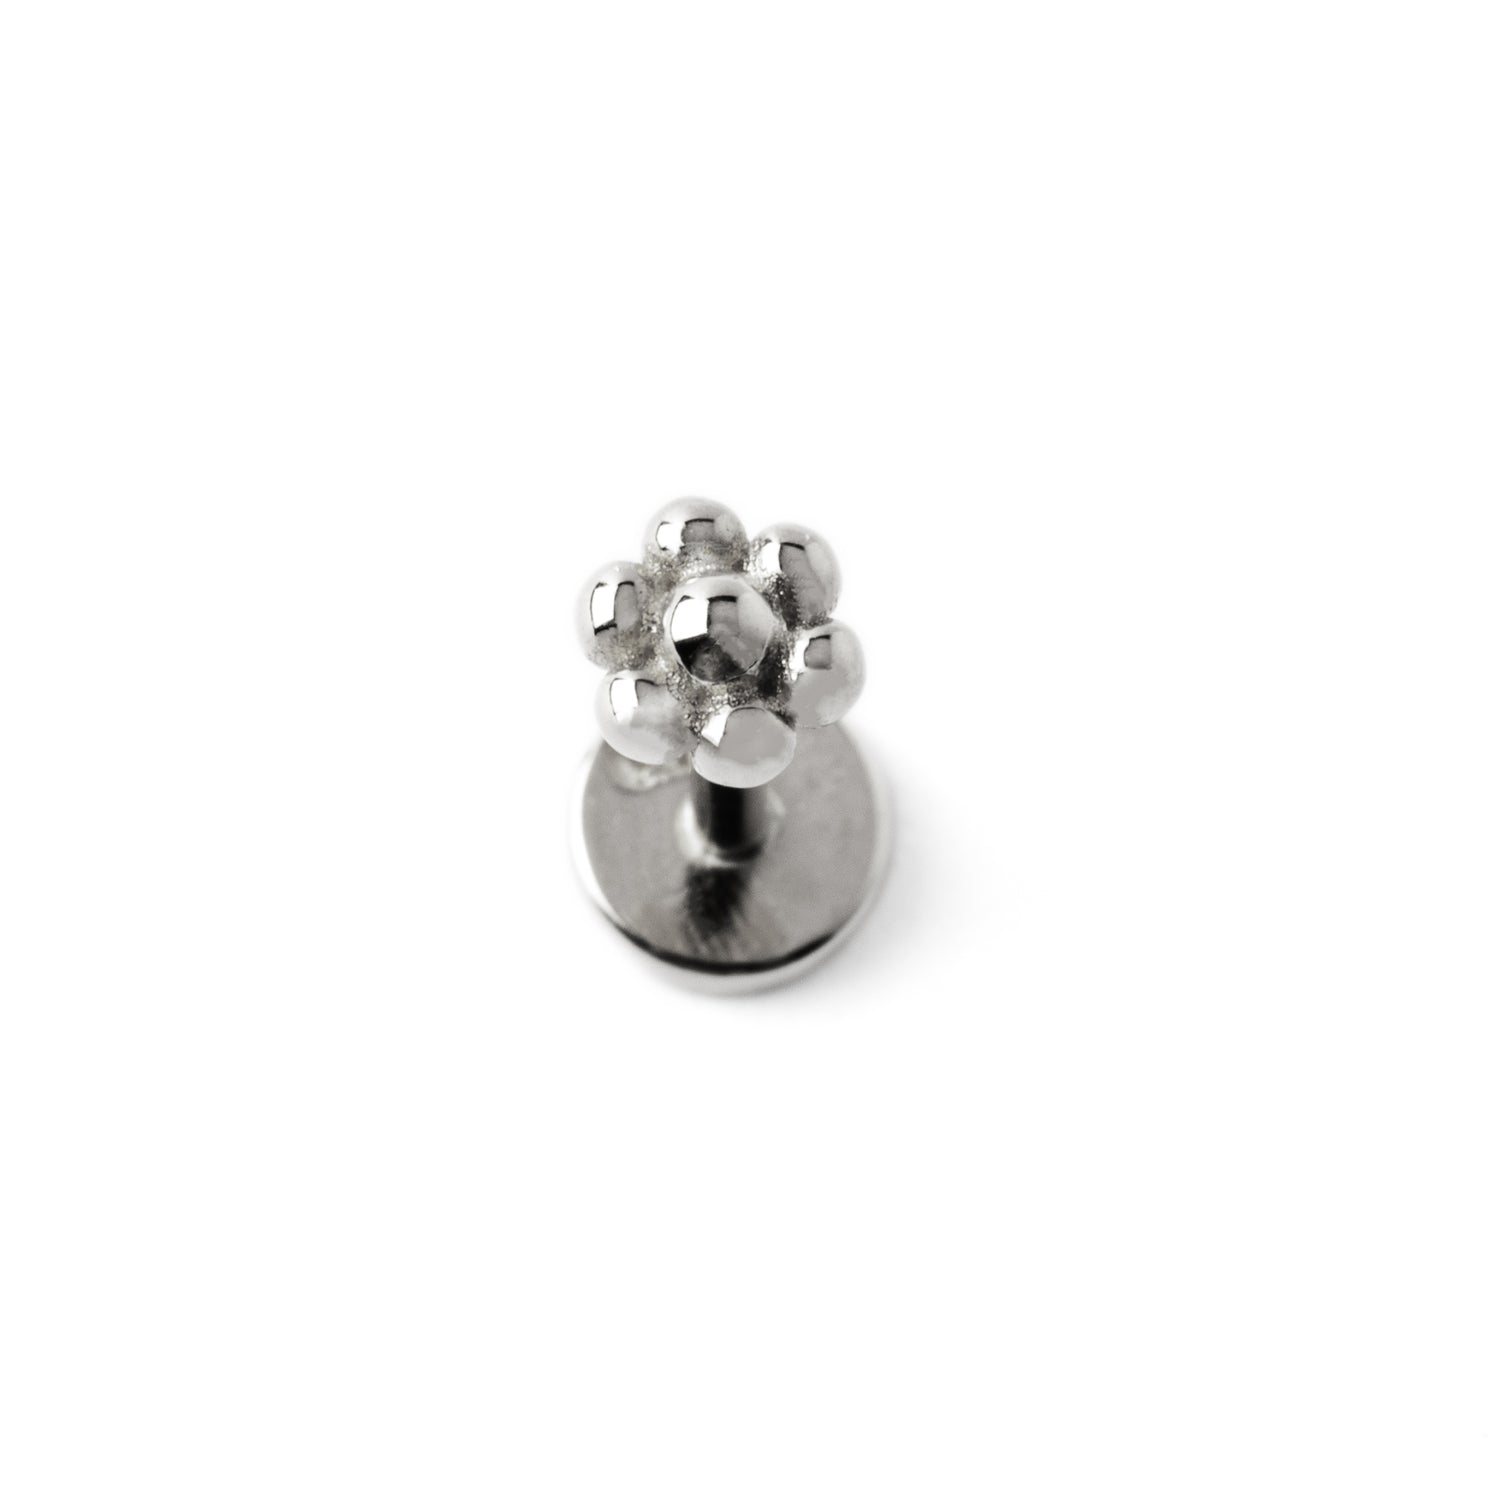 14k white Gold internally threaded screw back earring 1.2mm (16g), 8mm, dots flower labret stud frontal view